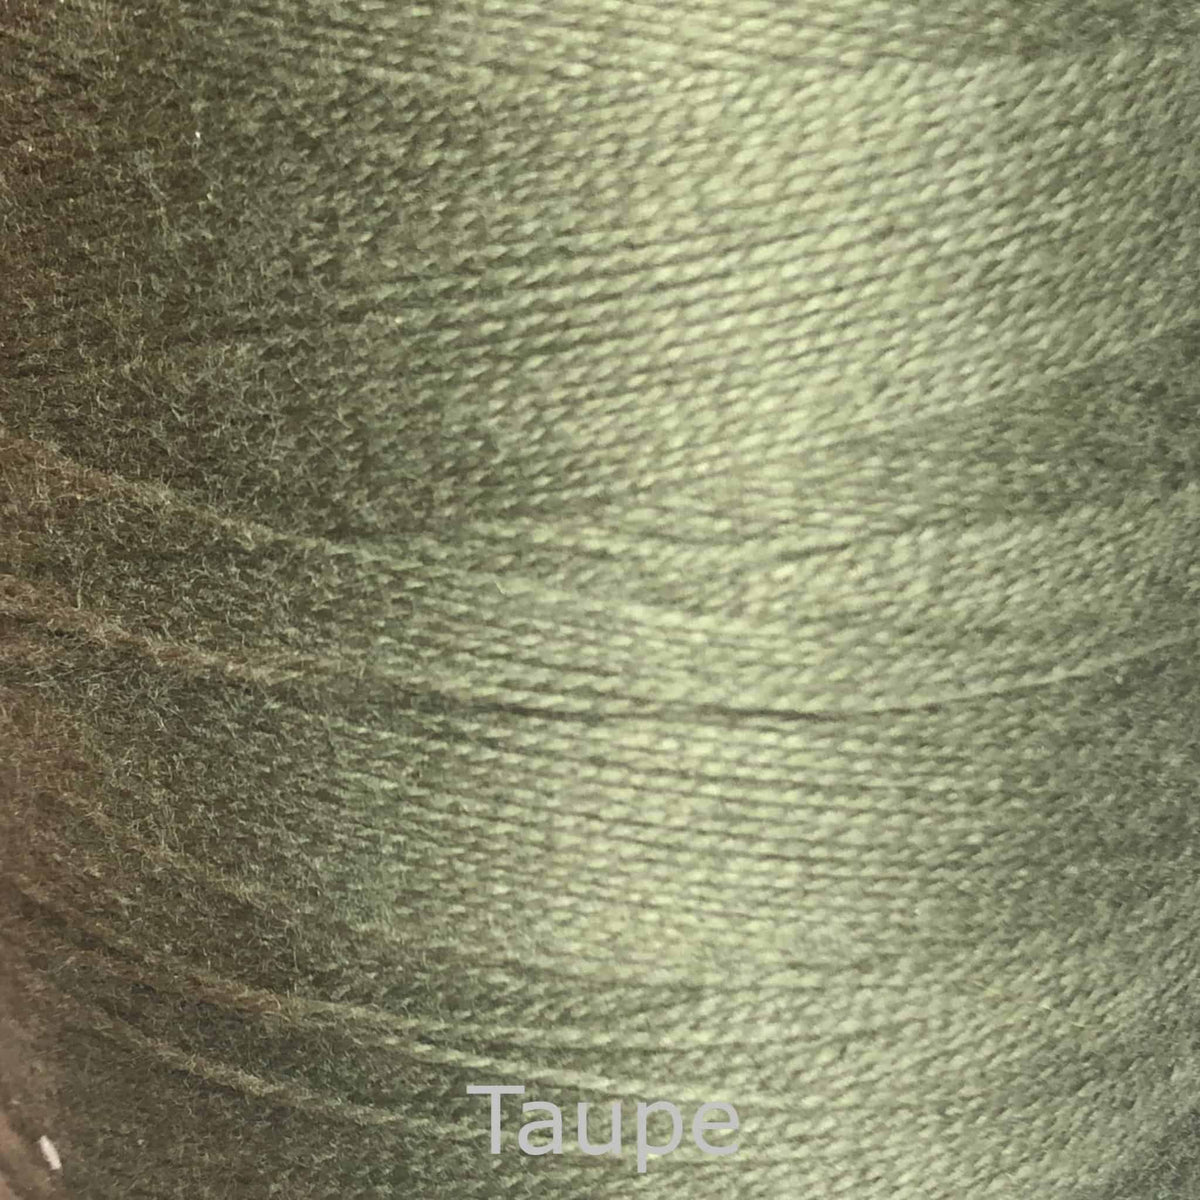 16/2 cotton weaving yarn taupe